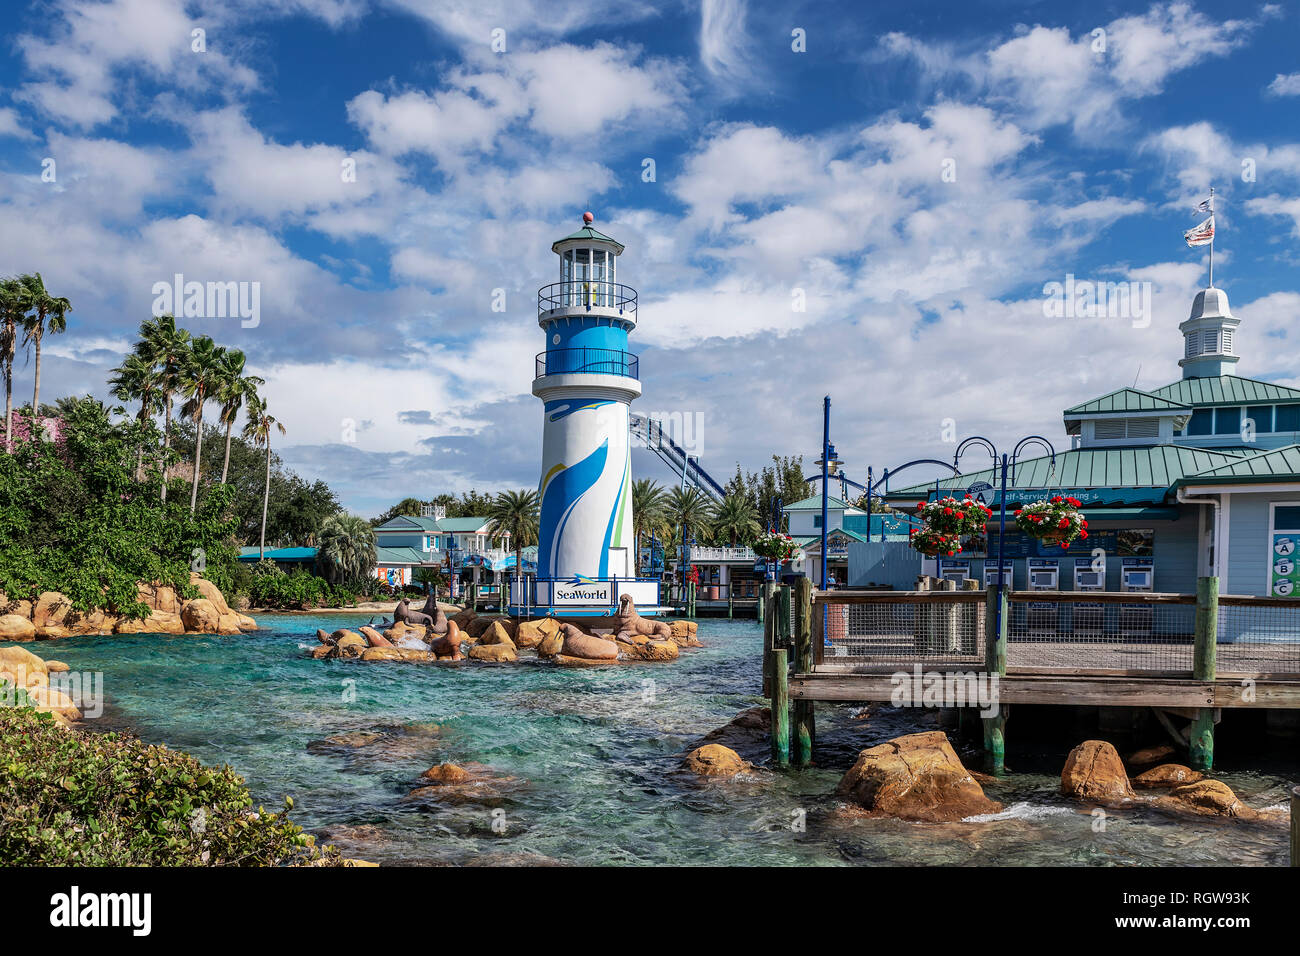 Seaworld marine park, Orlando Florida, USA. Stock Photo